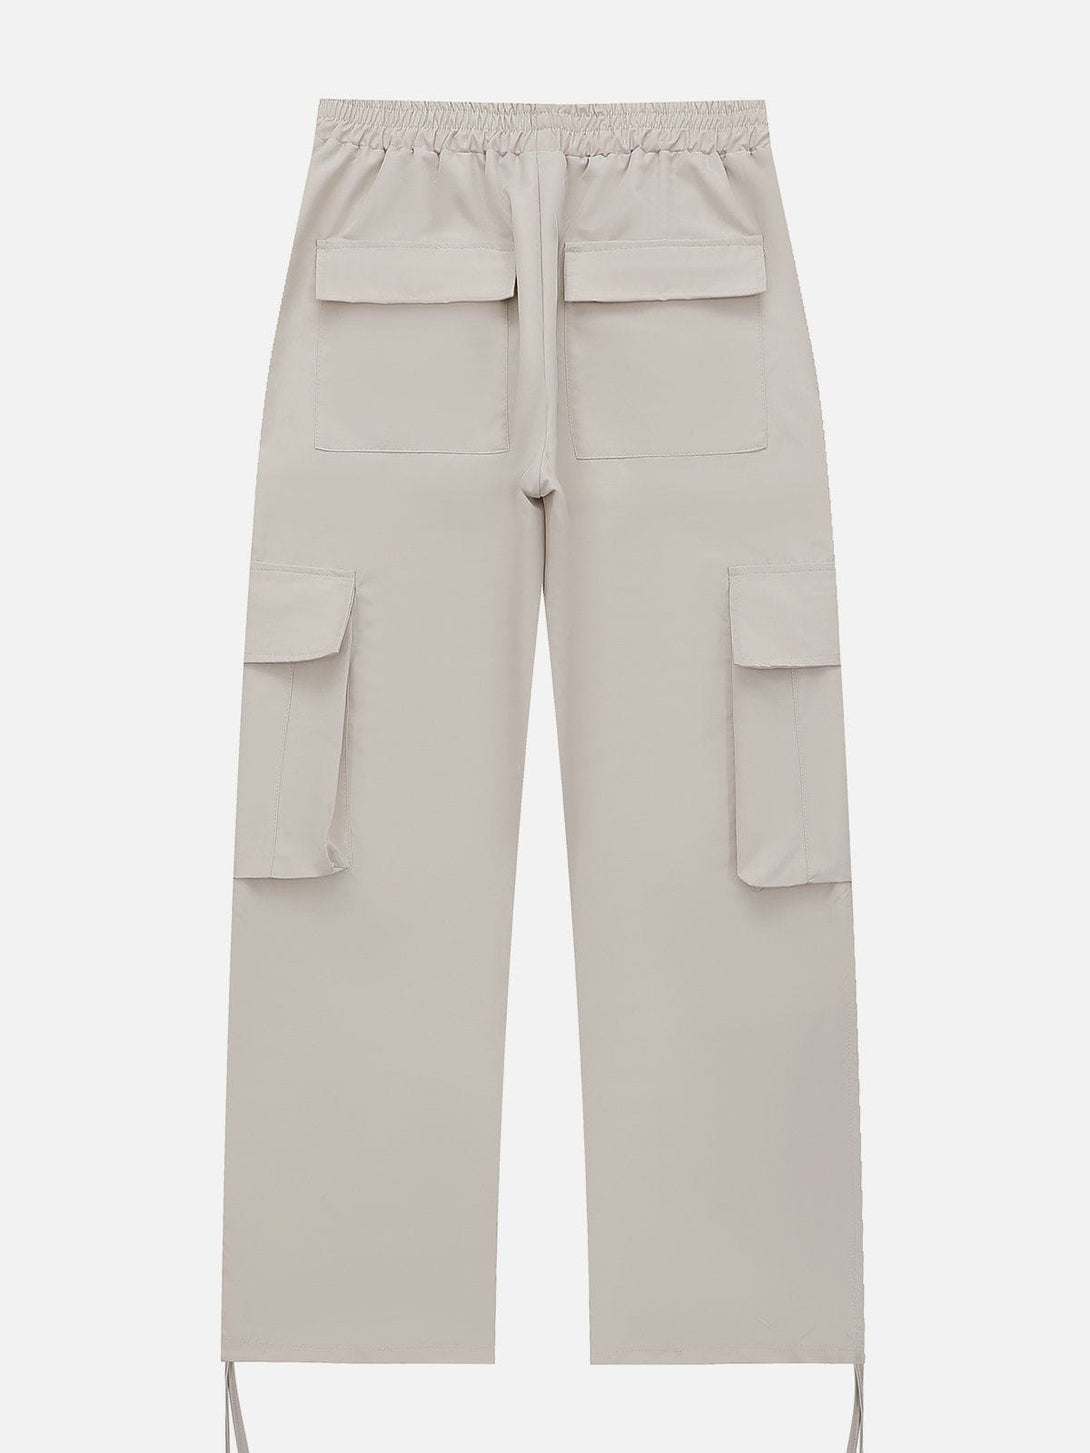 Majesda® - Side Pocket Drawstring Cargo Pants outfit ideas streetwear fashion